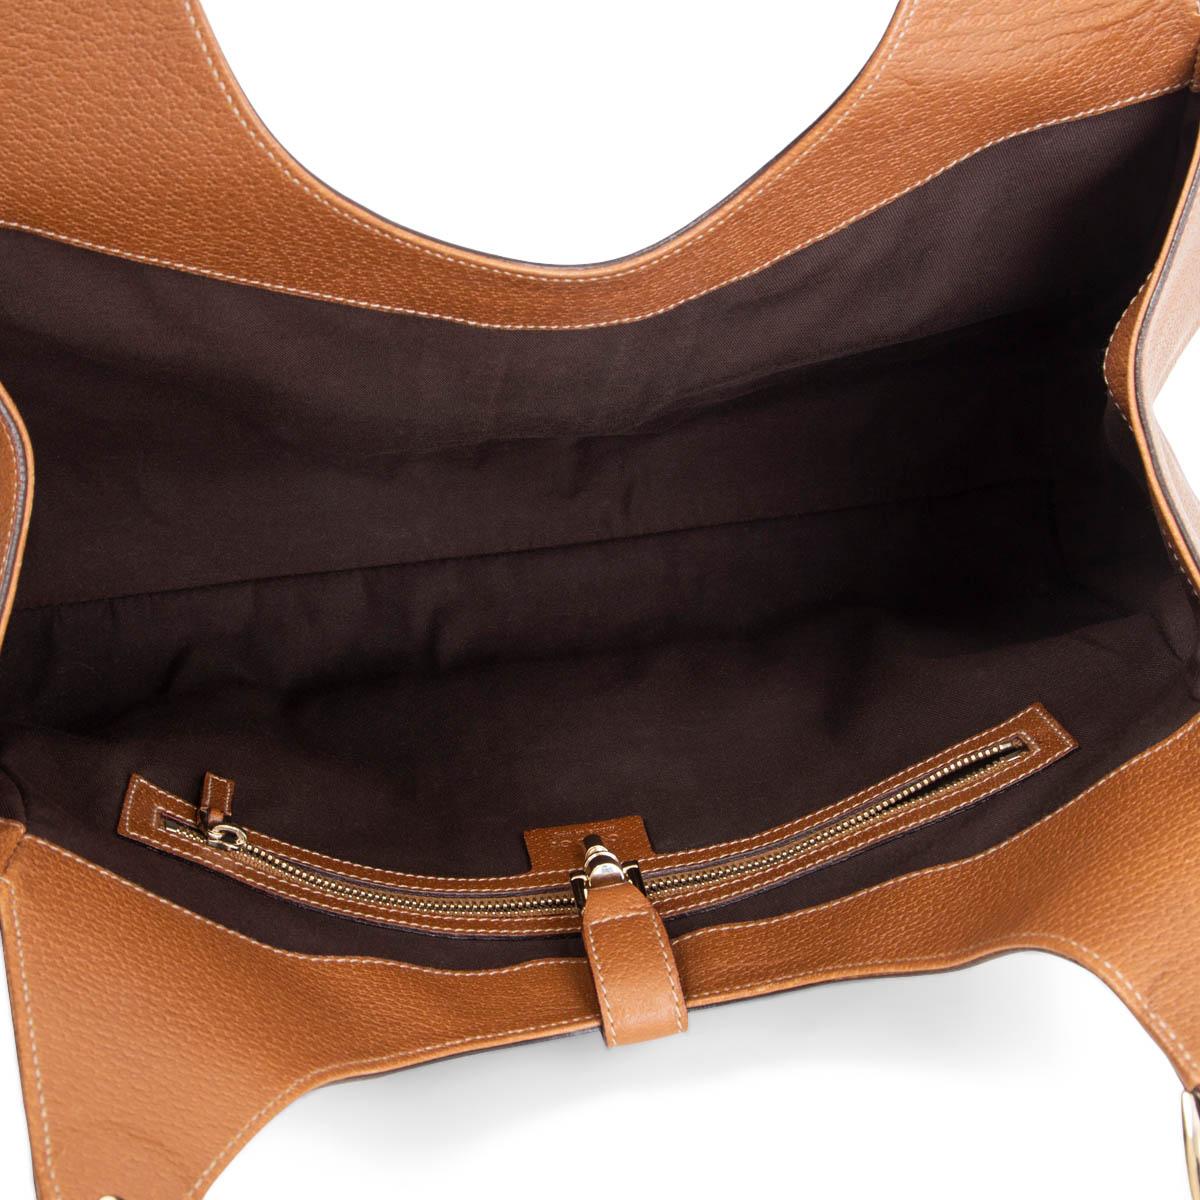 Women's GUCCI brown leather NAILHEAD JACKIE HOBO Shoulder Bag